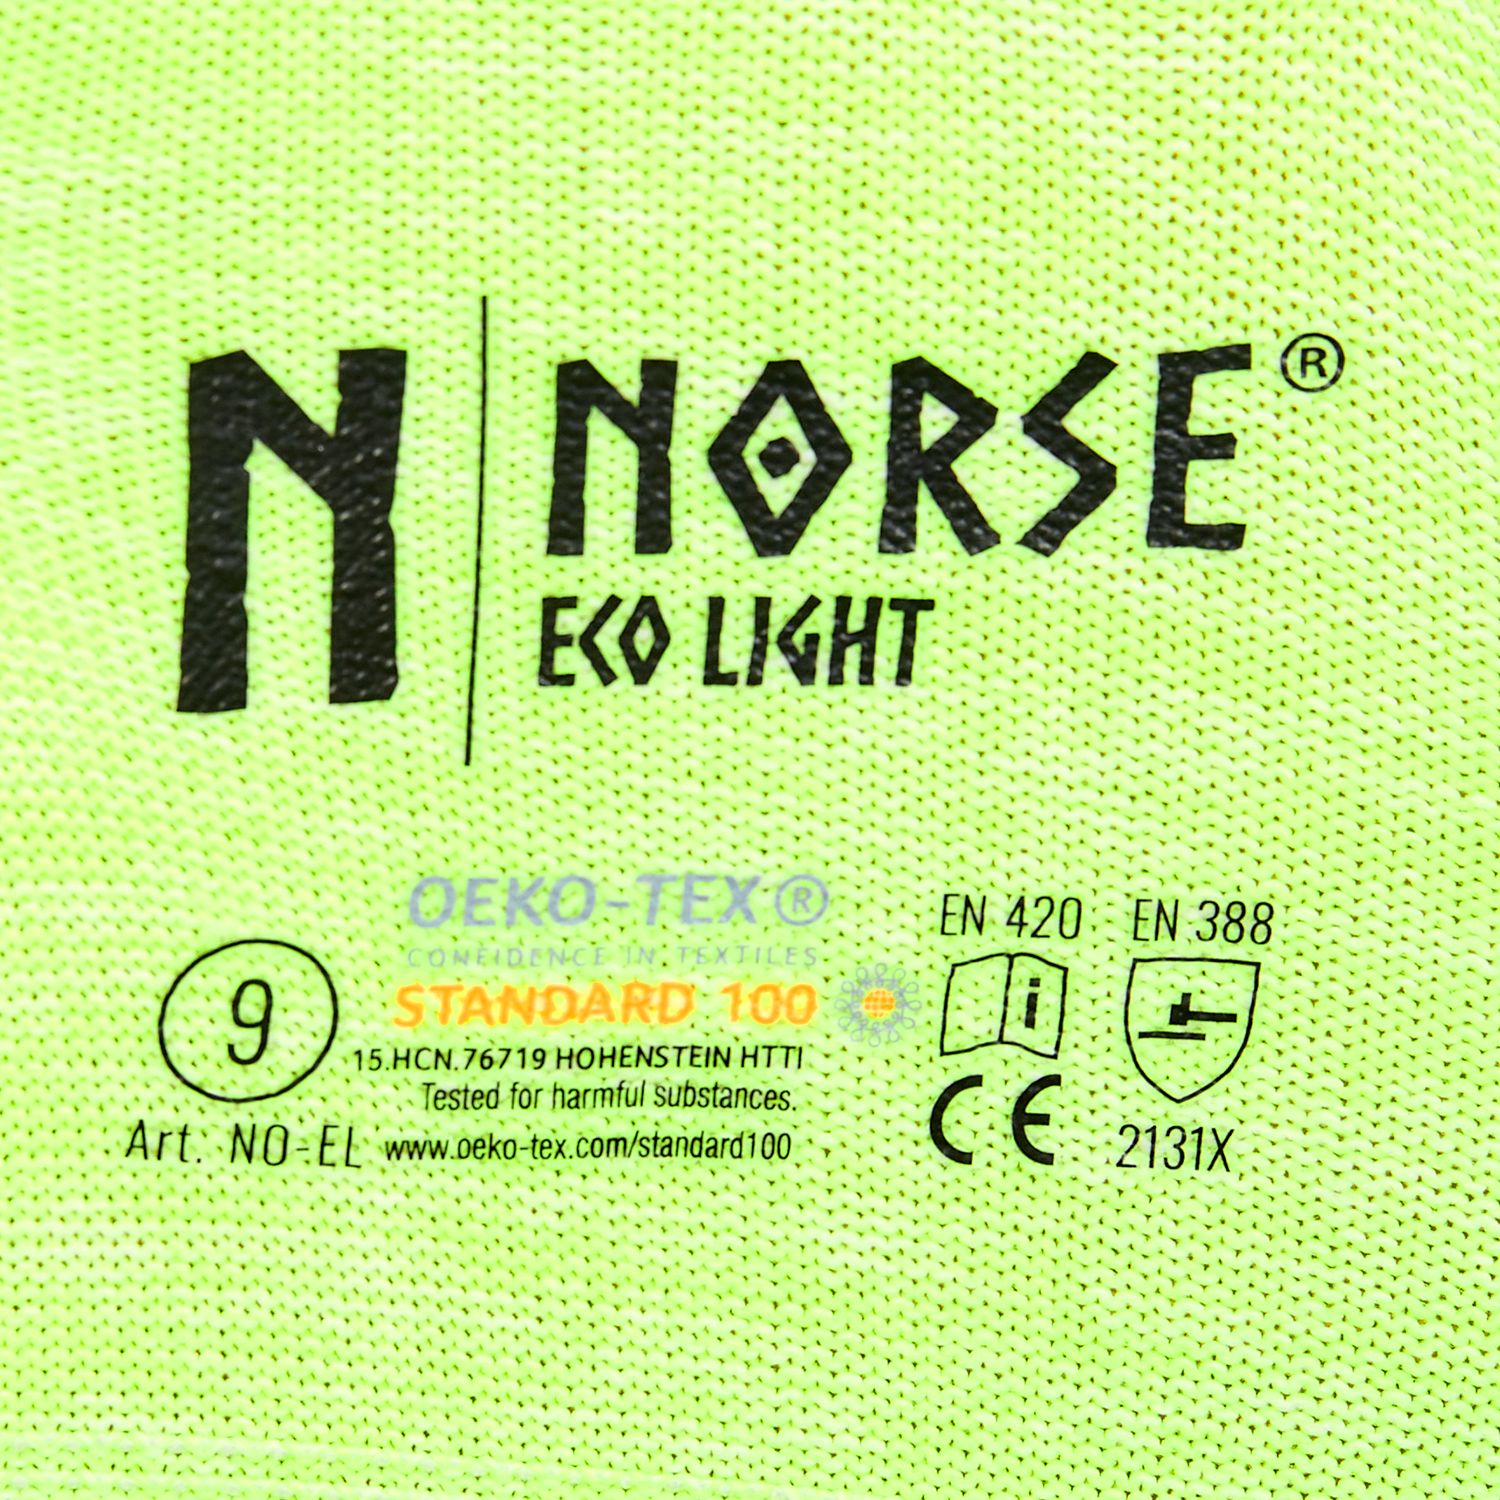 Guantes de montaje NORSE Eco Light talla 8